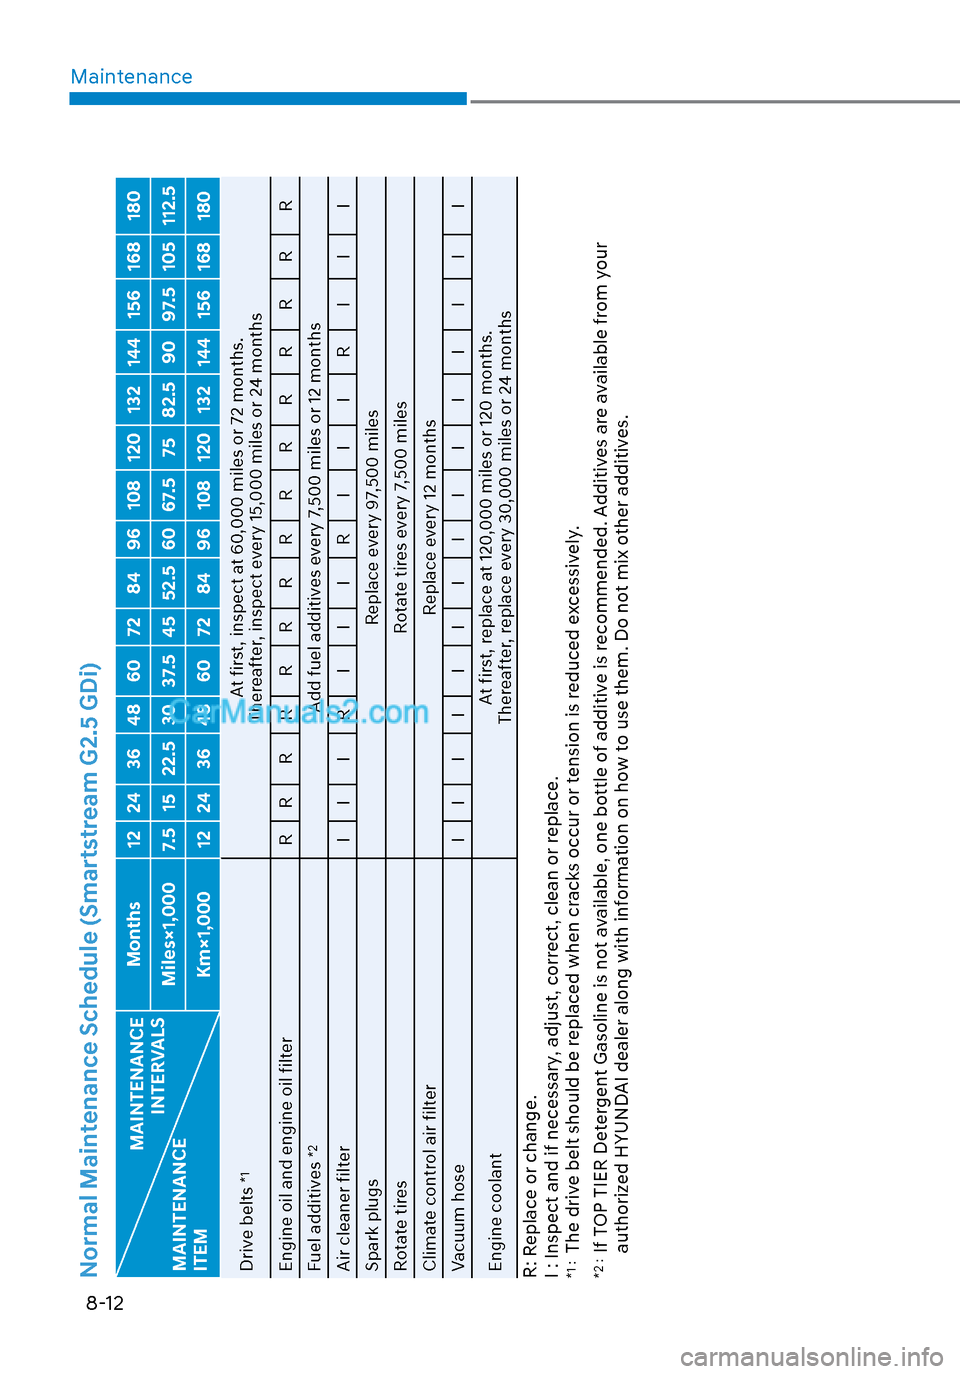 Hyundai Sonata 2020  Owners Manual Maintenance8-12
Normal Maintenance Schedule (Smartstream G2.5 GDi)
MAINTENANCE  INTERVALS
MAINTENANCE 
ITEM Months 12 24 36 48 60 72 84 96 108 120 132 144 156 168 180
Miles×1,000 7.5 15 22.5 30 37.5 